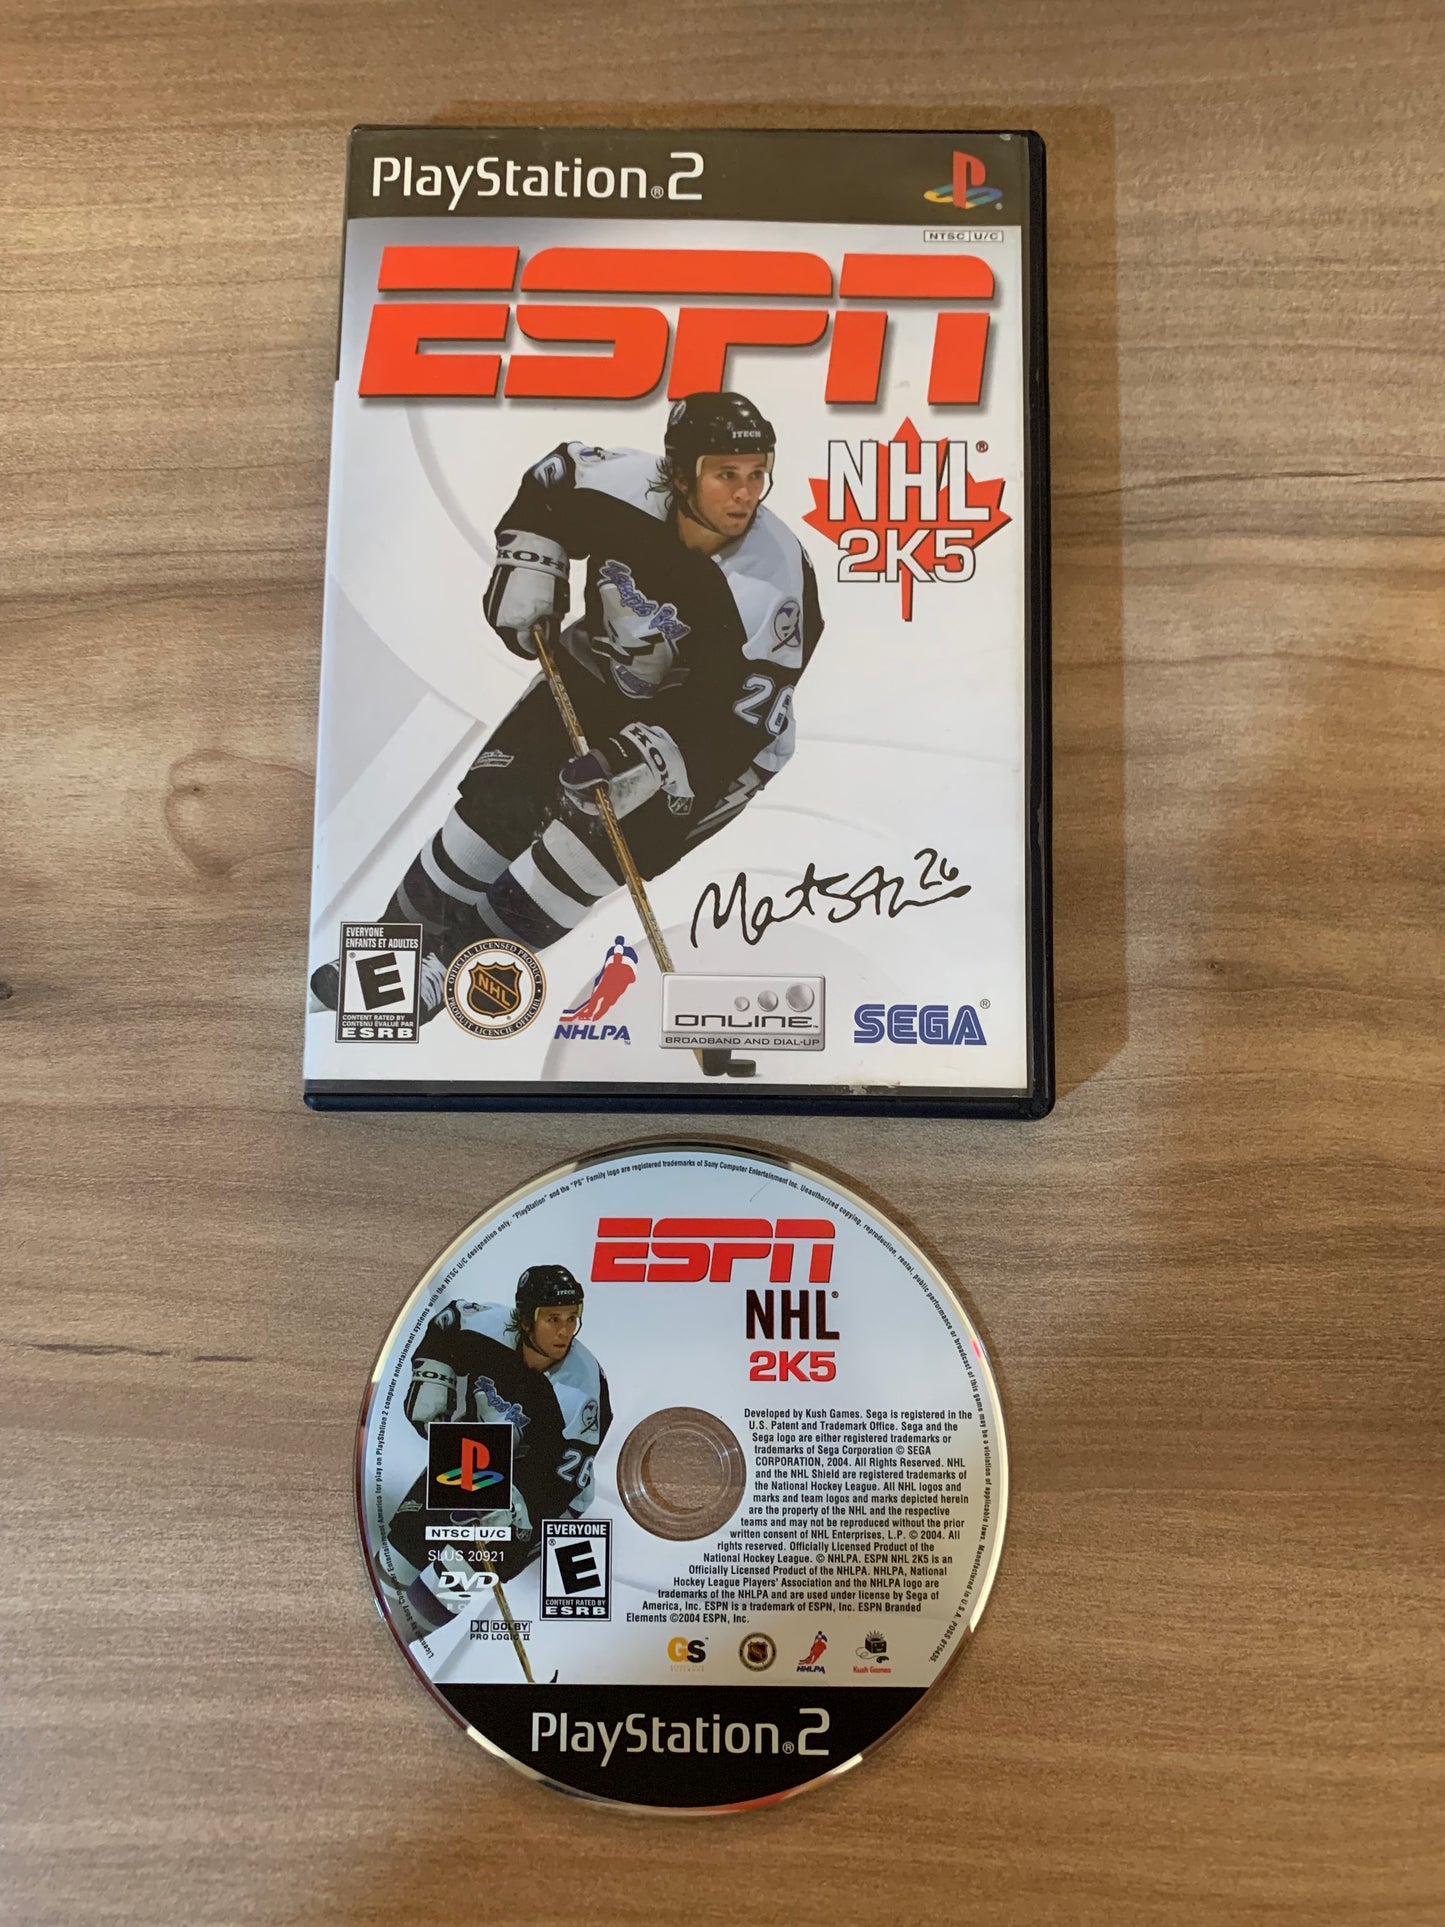 PiXEL-RETRO.COM : SONY PLAYSTATION 2 (PS2) COMPLET CIB BOX MANUAL GAME NTSC ESPN NHL 2K5